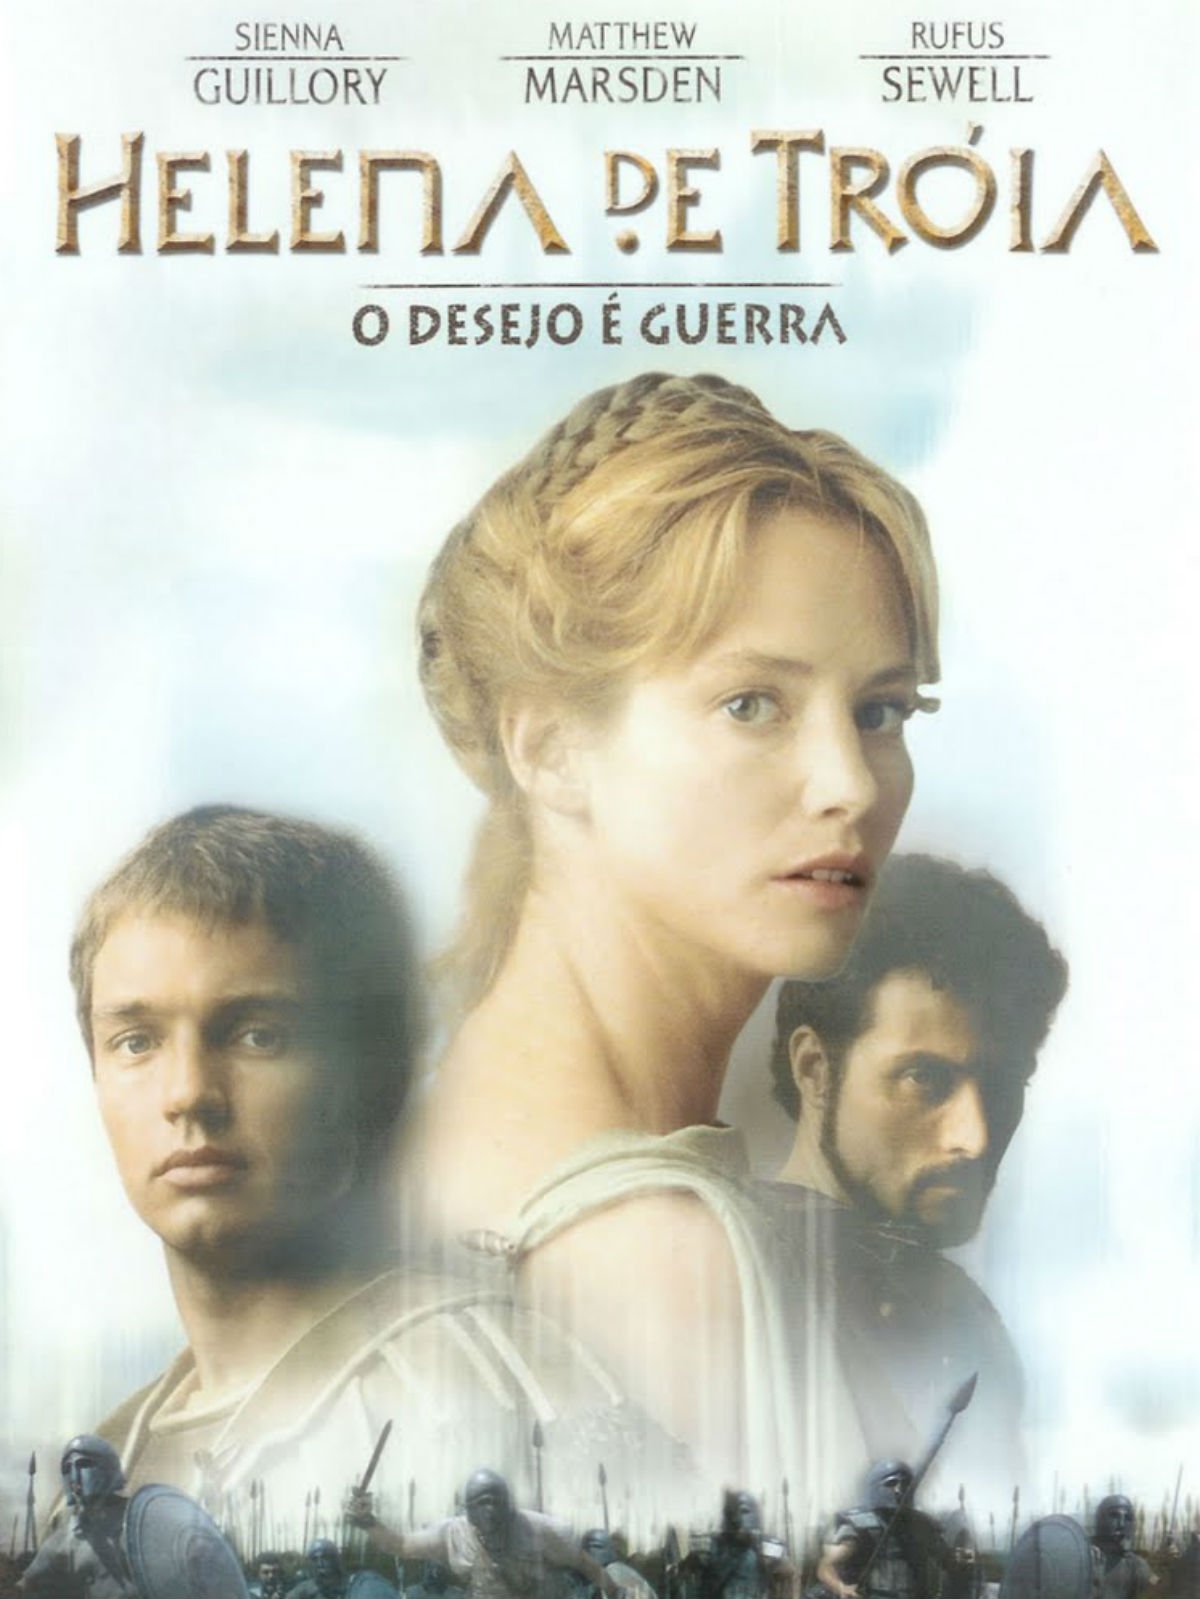 Mar Aberto - Filme 2003 - AdoroCinema